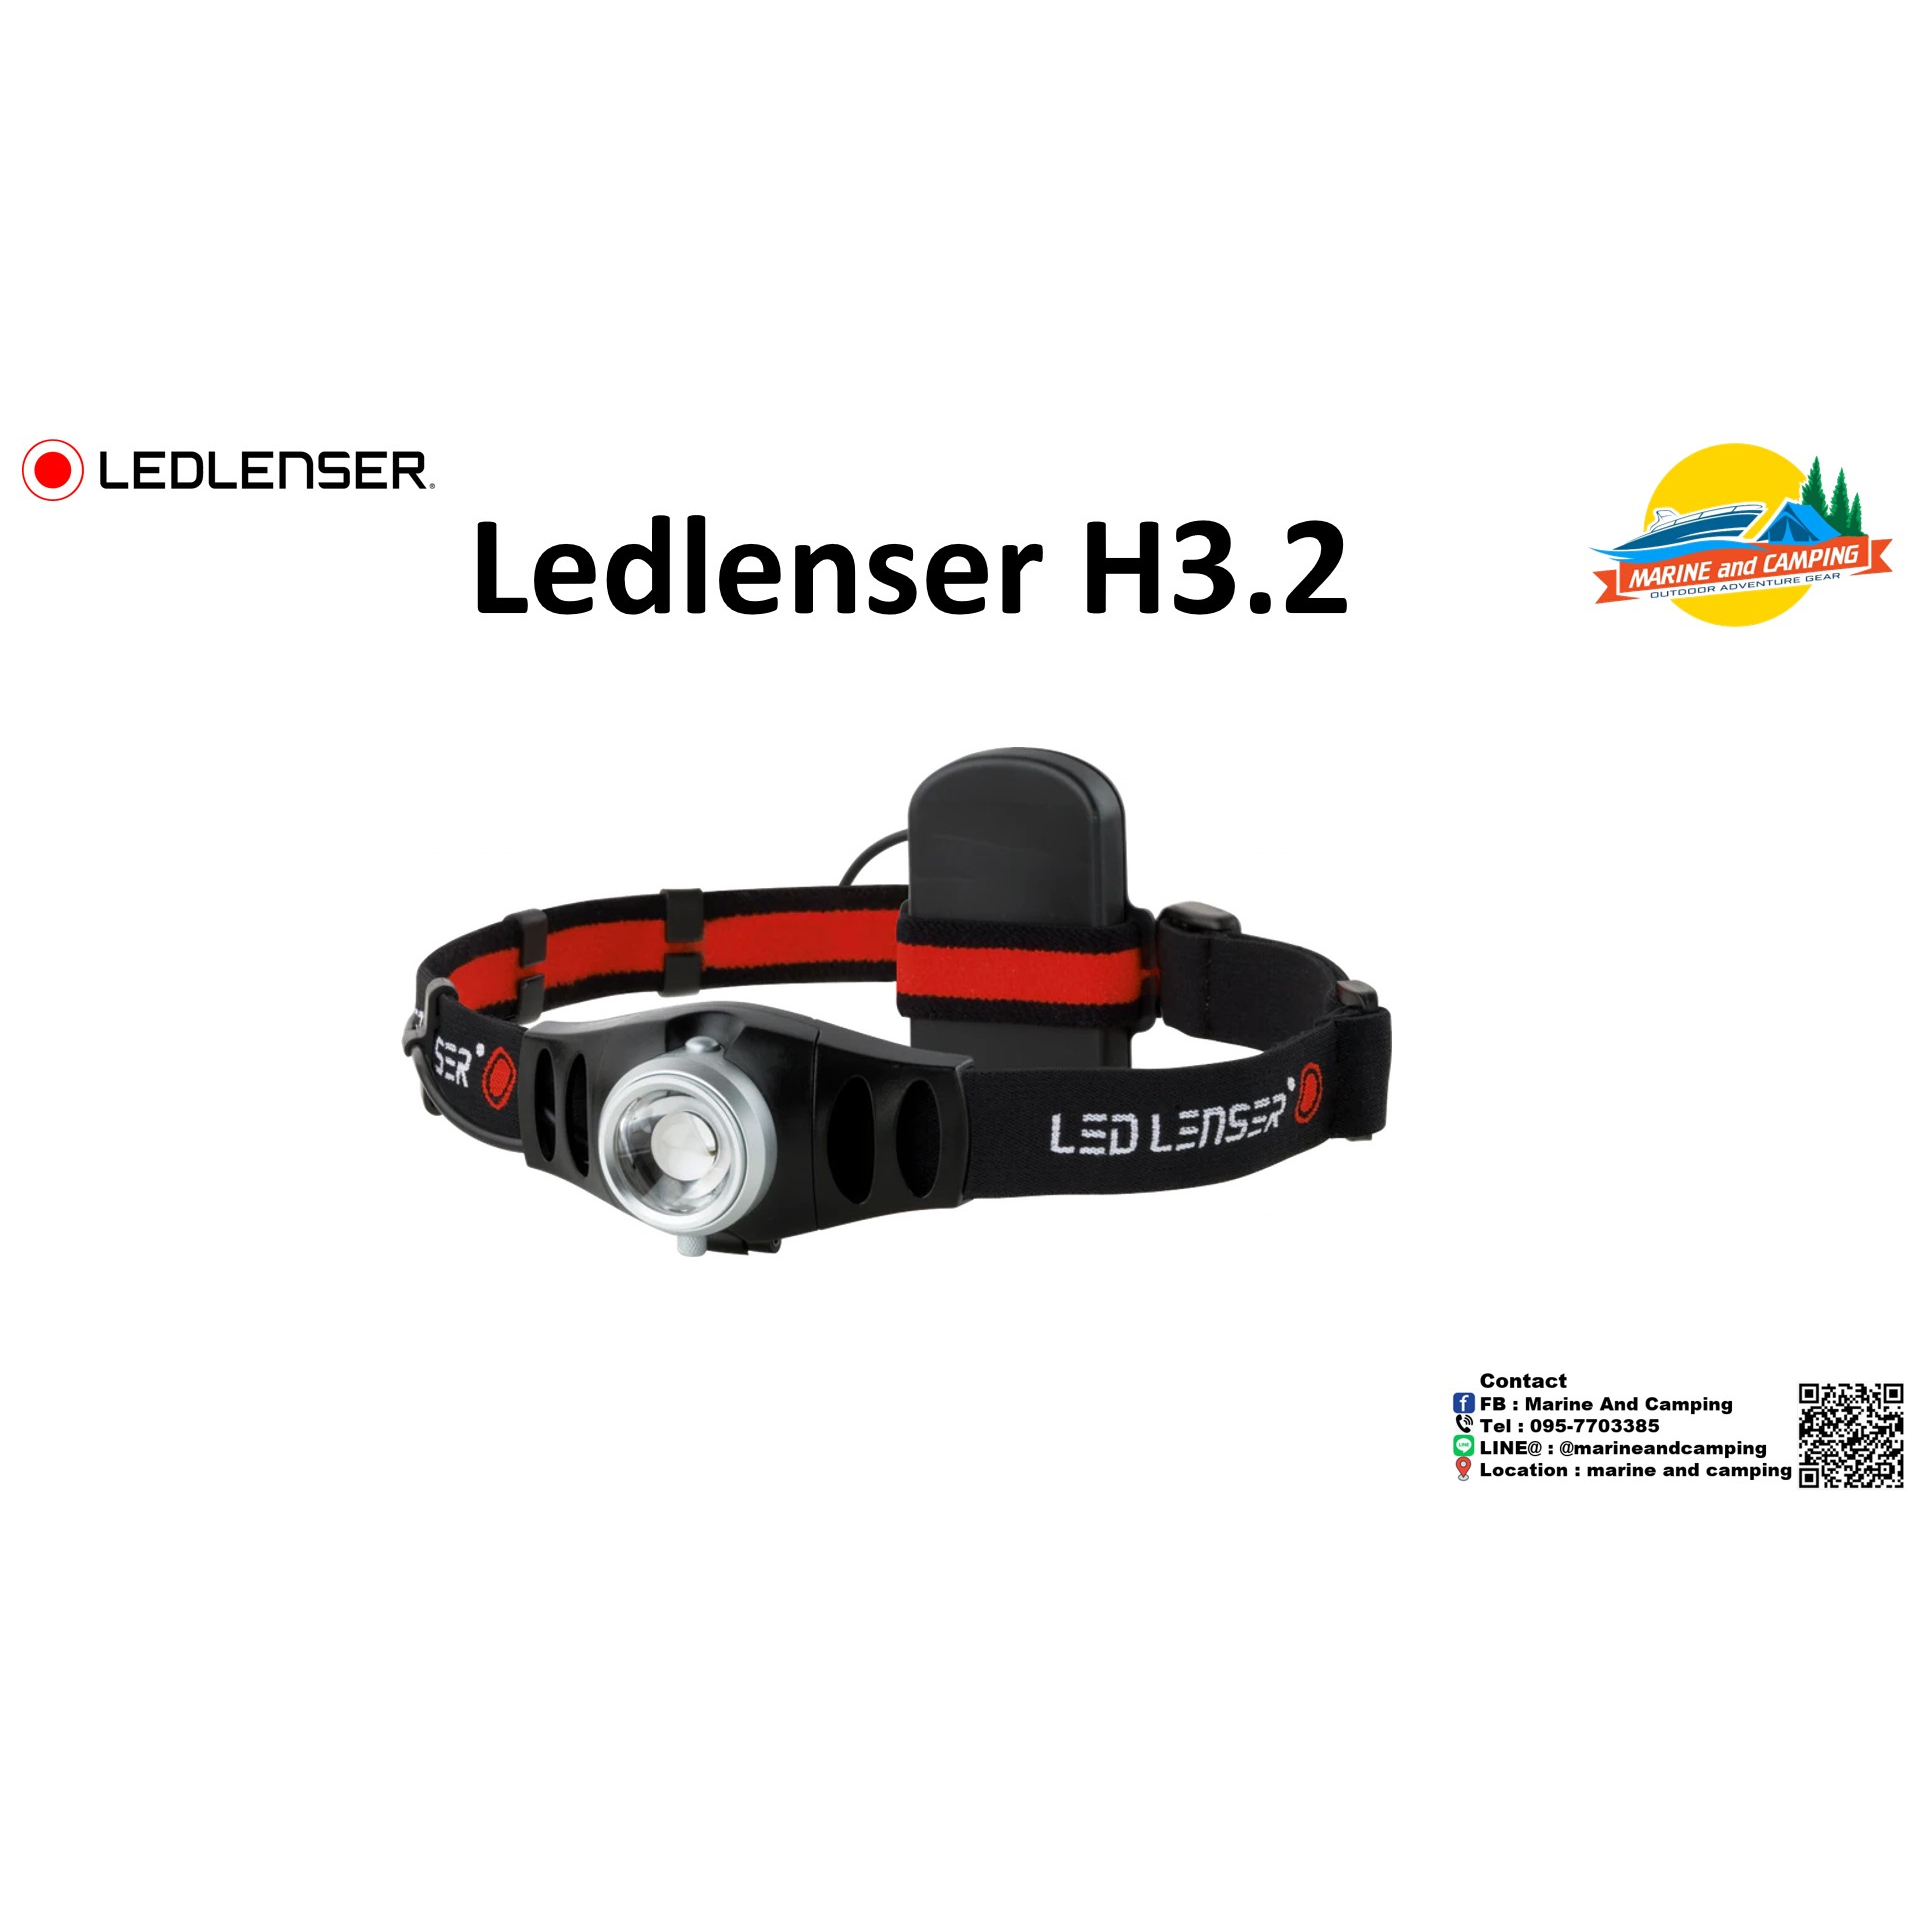 Led Lenser H3.2  ไฟฉายคาดหัวตัวเล็กยอดนิยมแต่มาพร้อมสเปคใหม่ ปรับสว่าง-หรี่ได้ดังใจ 5-120 Lumen